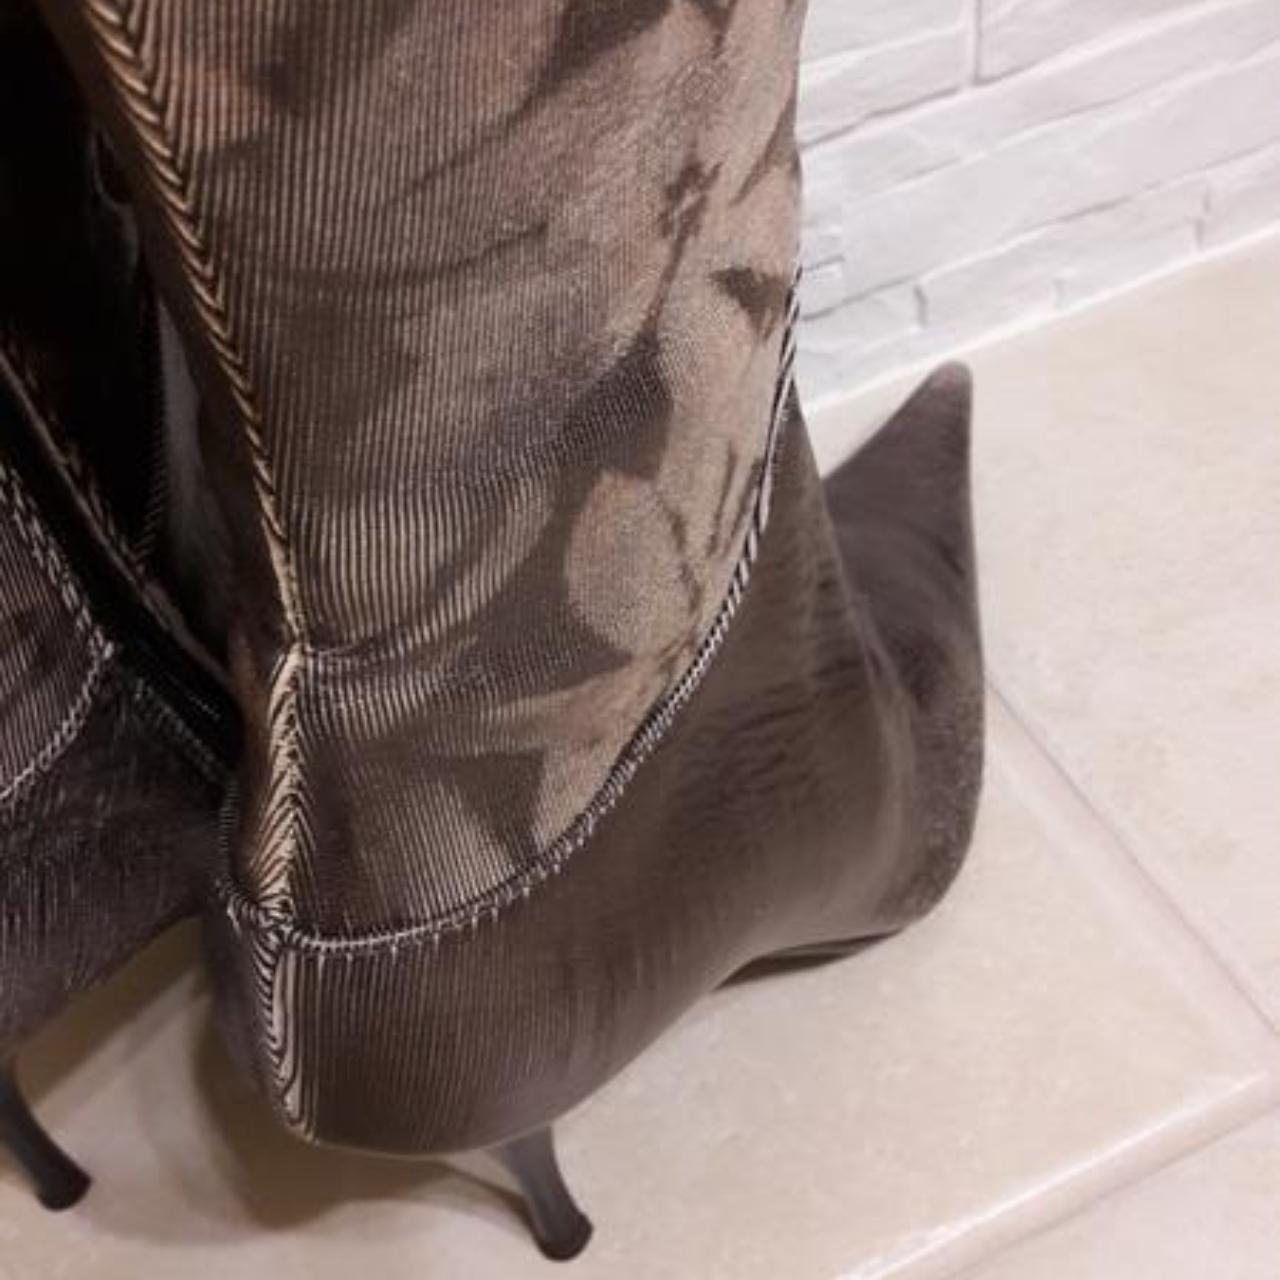 Women's Brown Boots | Depop